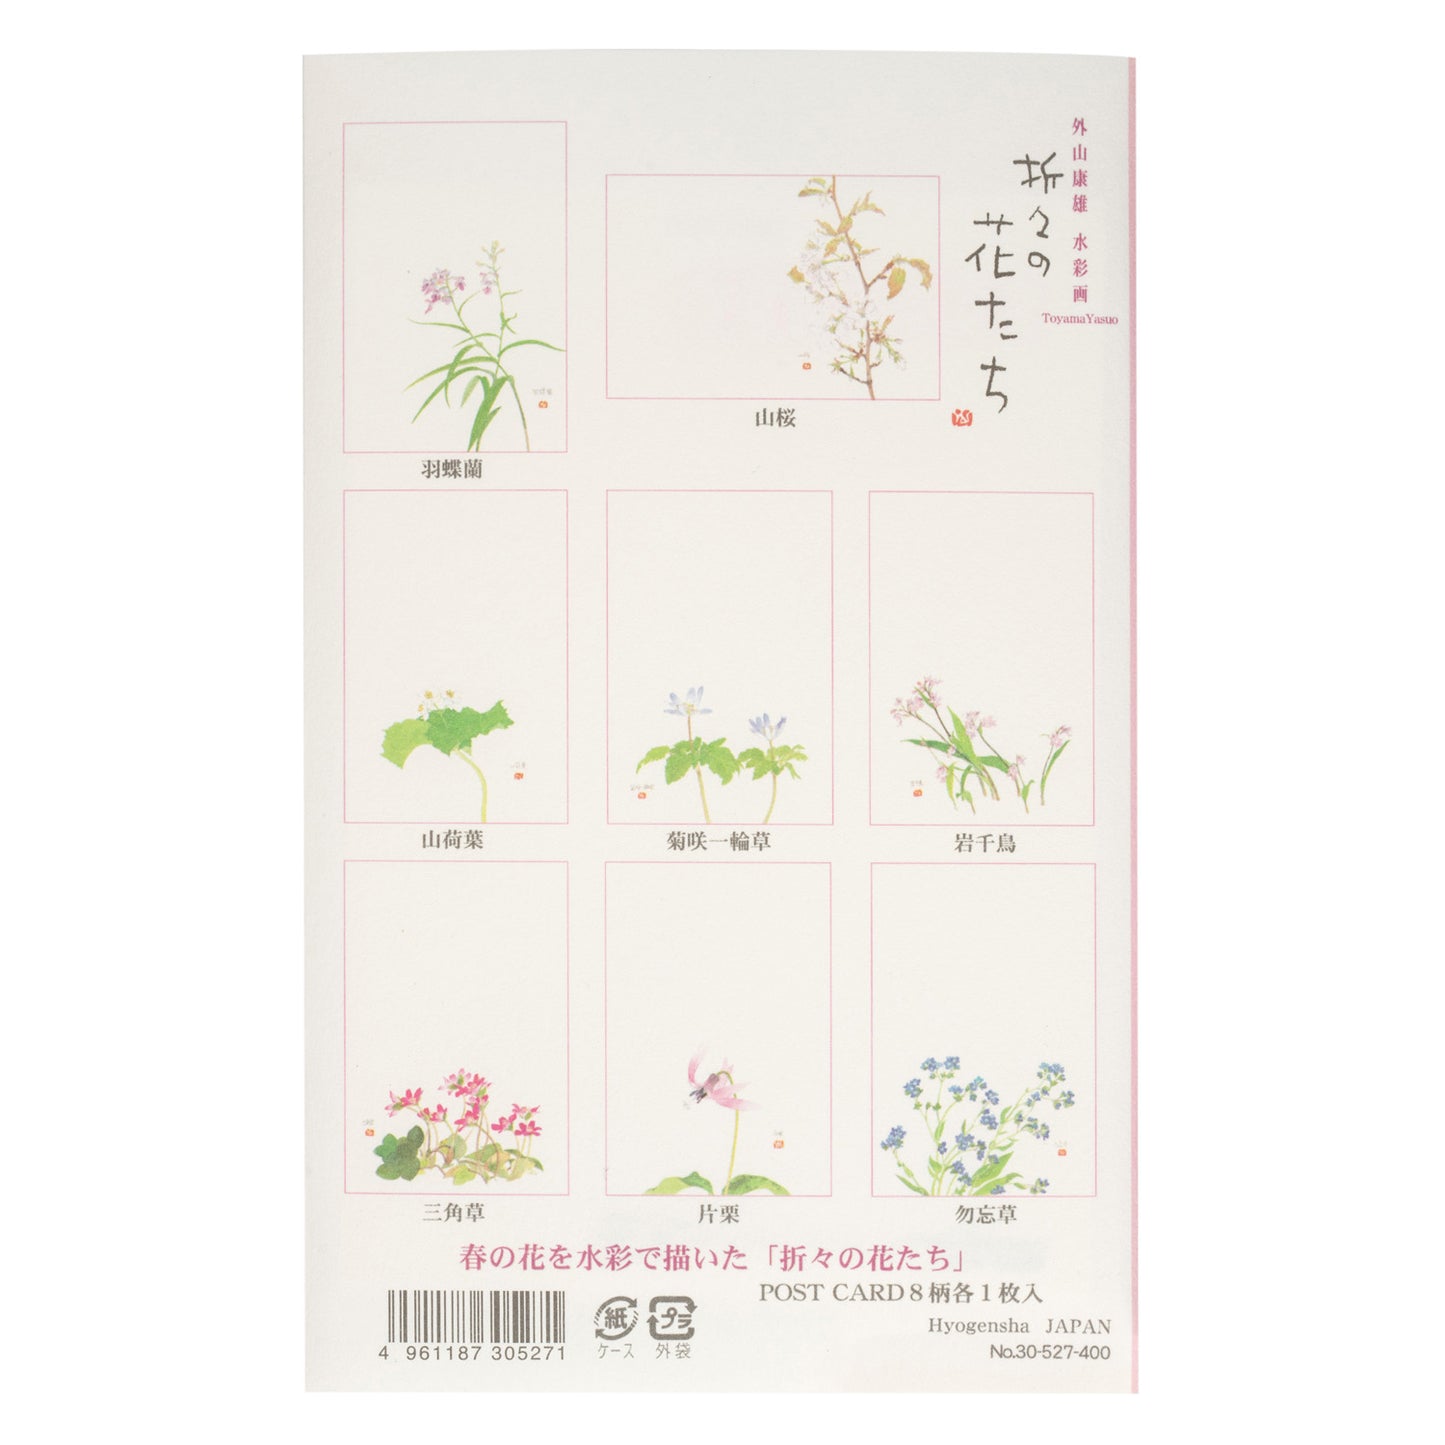 Spring Flowers Pack of 8 Japanese Postcards designs